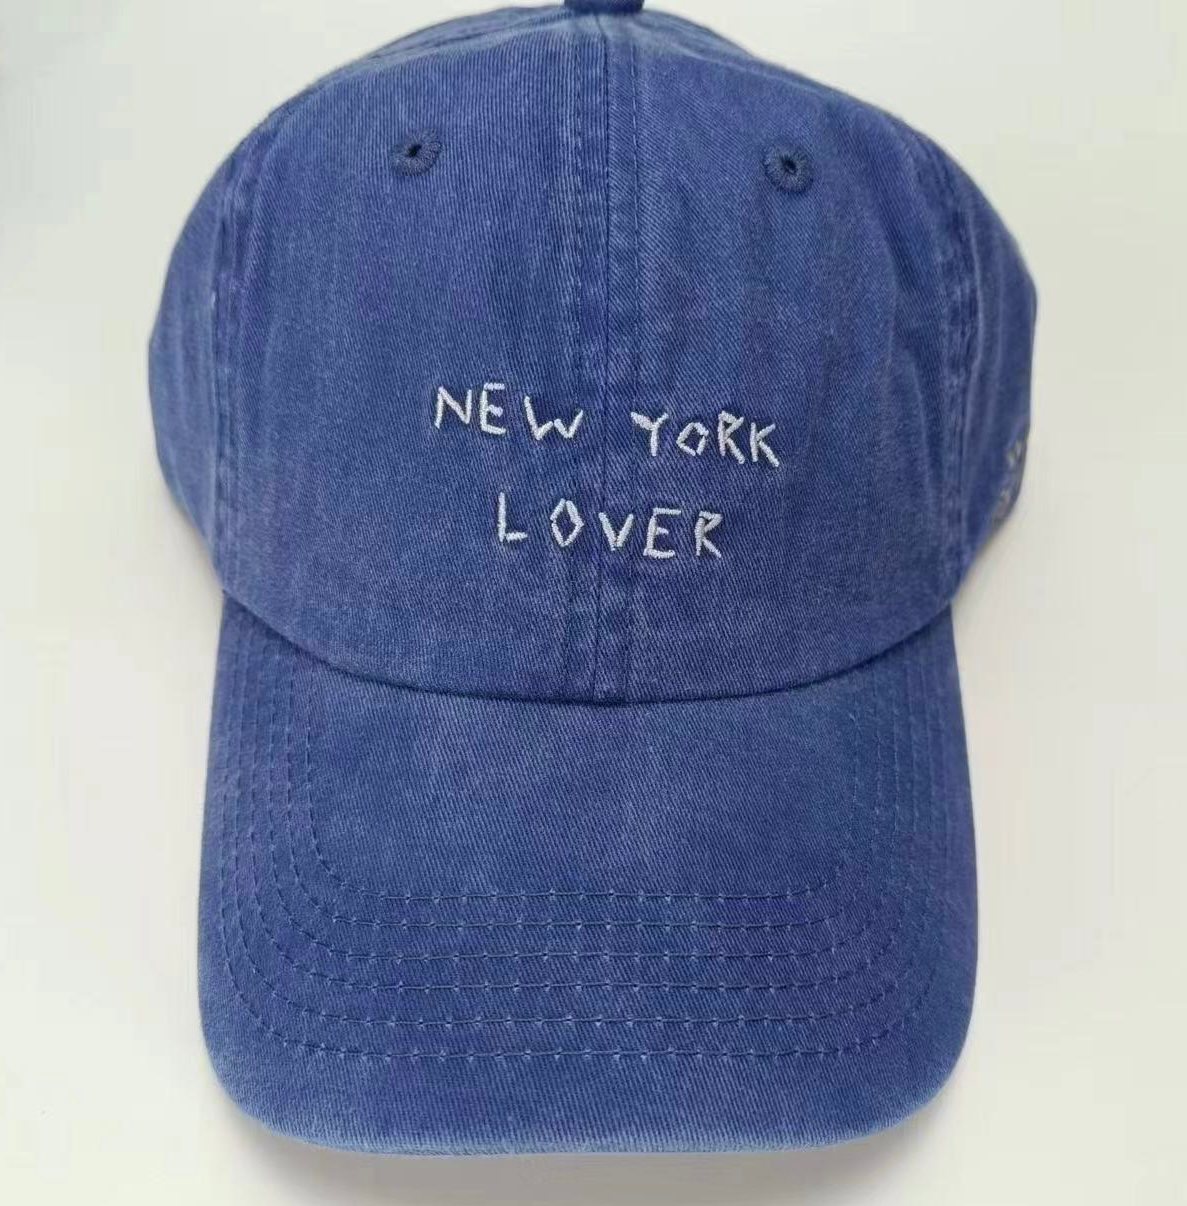 New York Lover hat